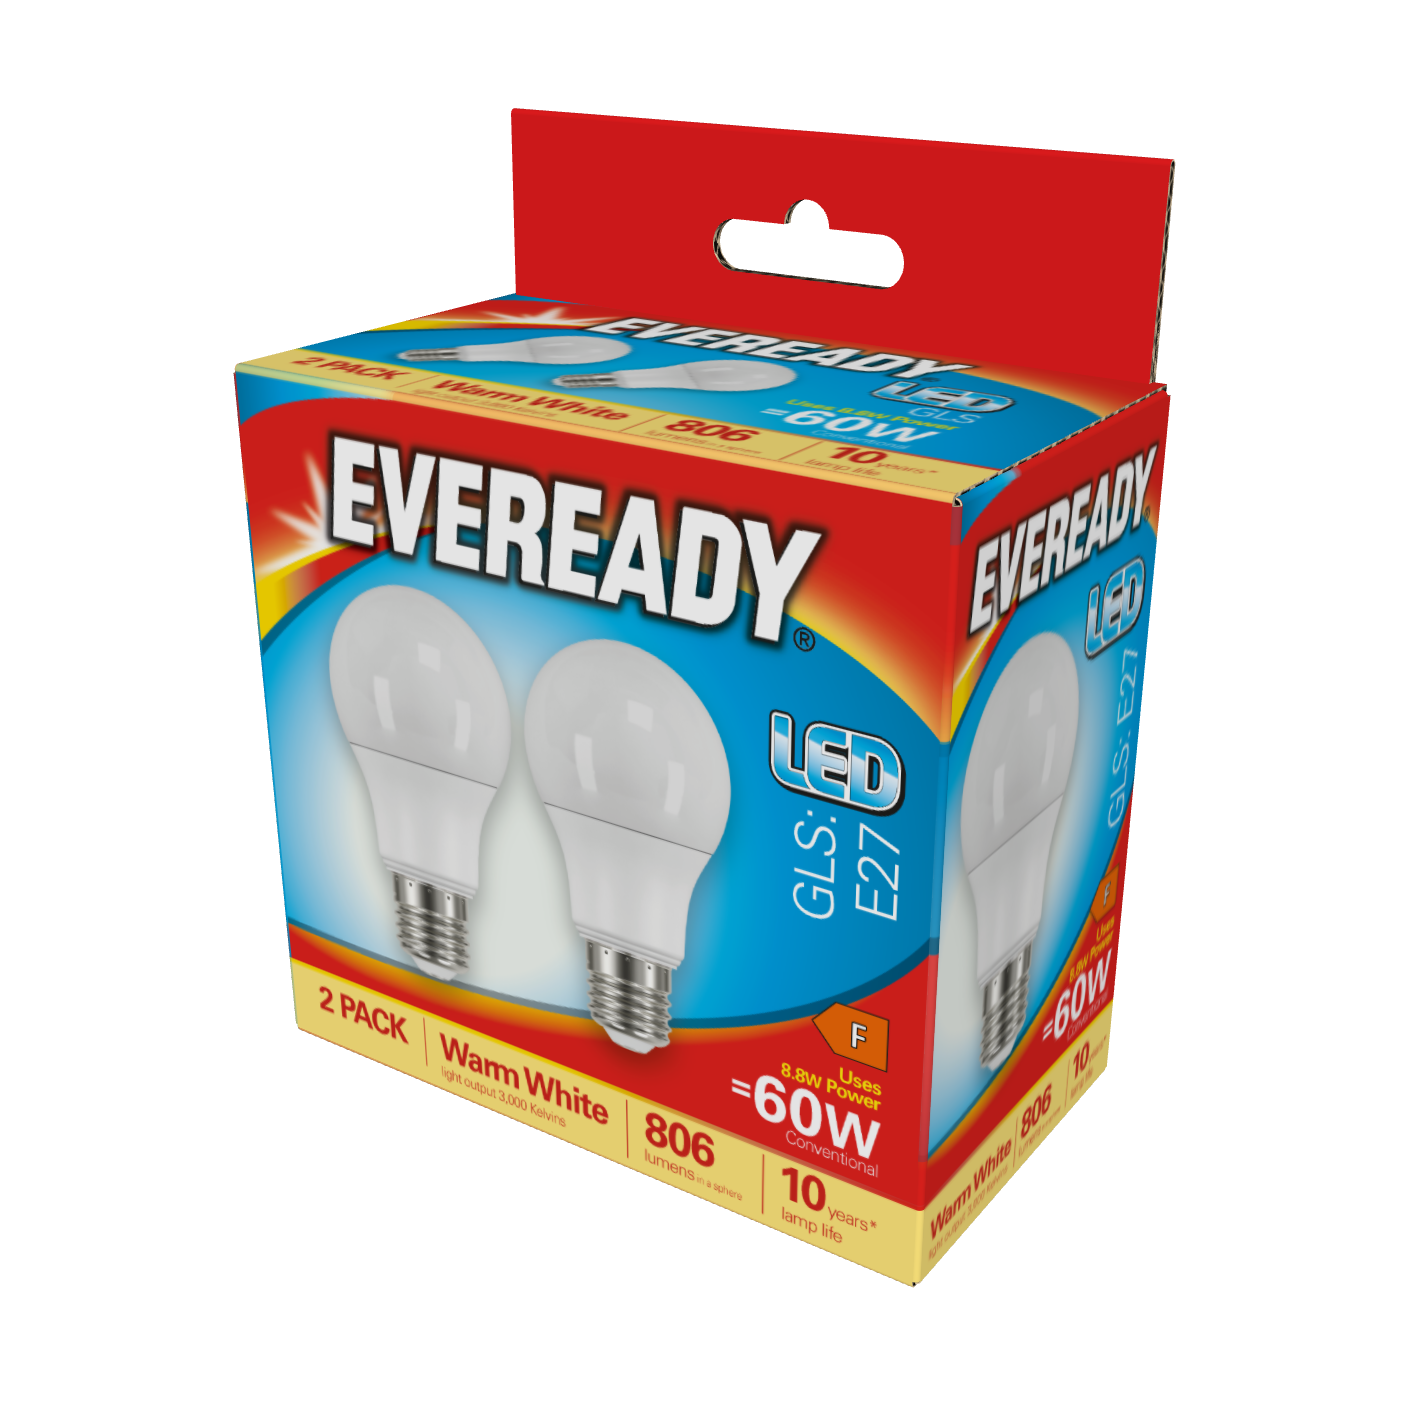 Eveready LED GLS E27 (ES) 806lm 8.8W 3,000K (Warm White), Box of 2